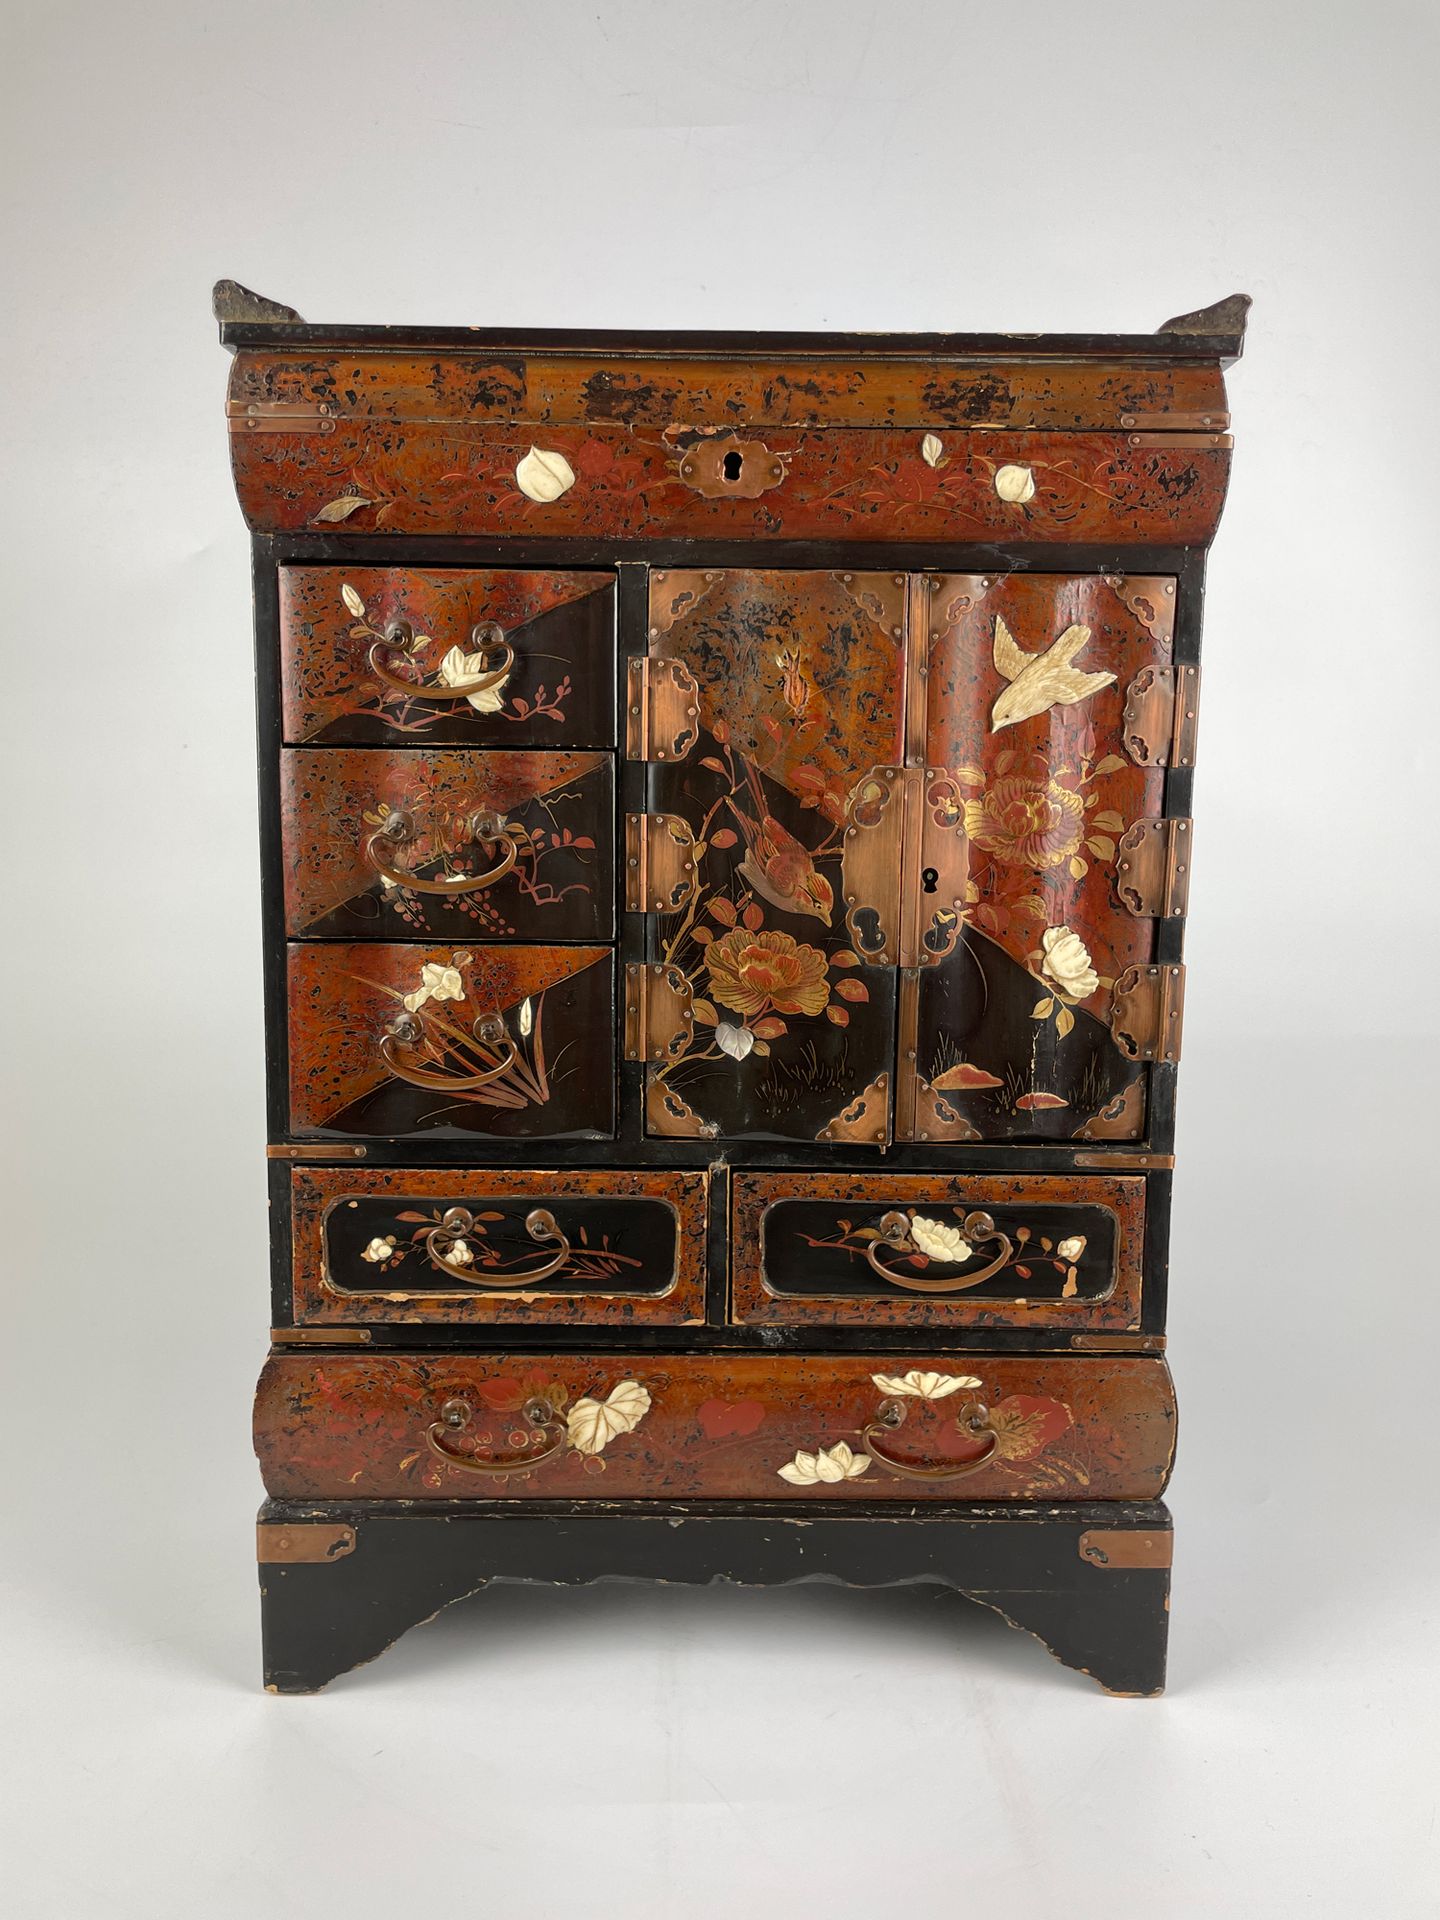 Null 一件科里安橱柜，漆木，抽屉和门都有自然主义的装饰，镶嵌着象牙和珍珠母。19世纪晚期 44 x 30 x 15厘米(碎片)